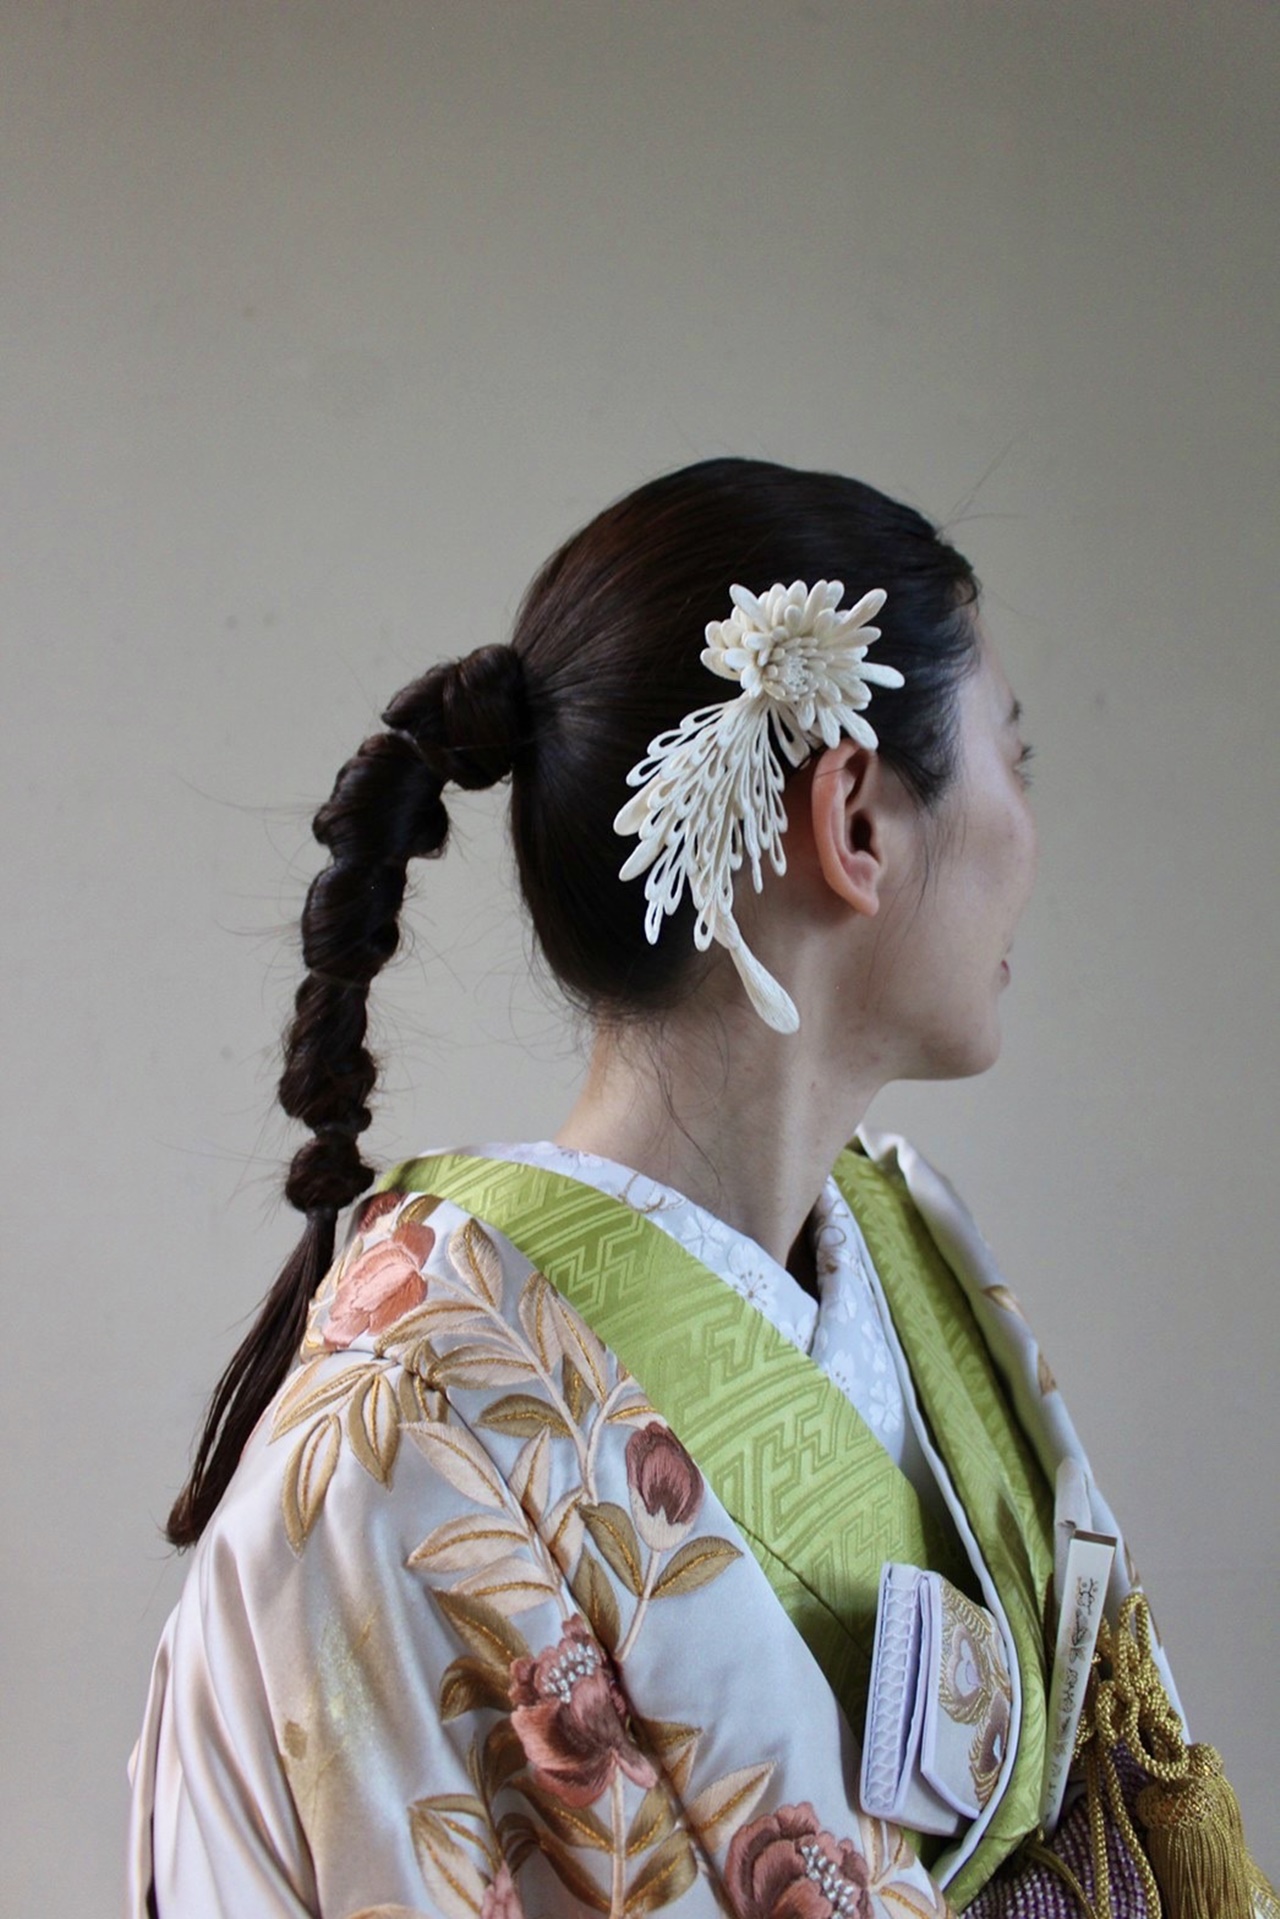 emi takazawaの横振り刺繍の髪飾りは、絹糸を織って作られた和装にピッタリのデザインです